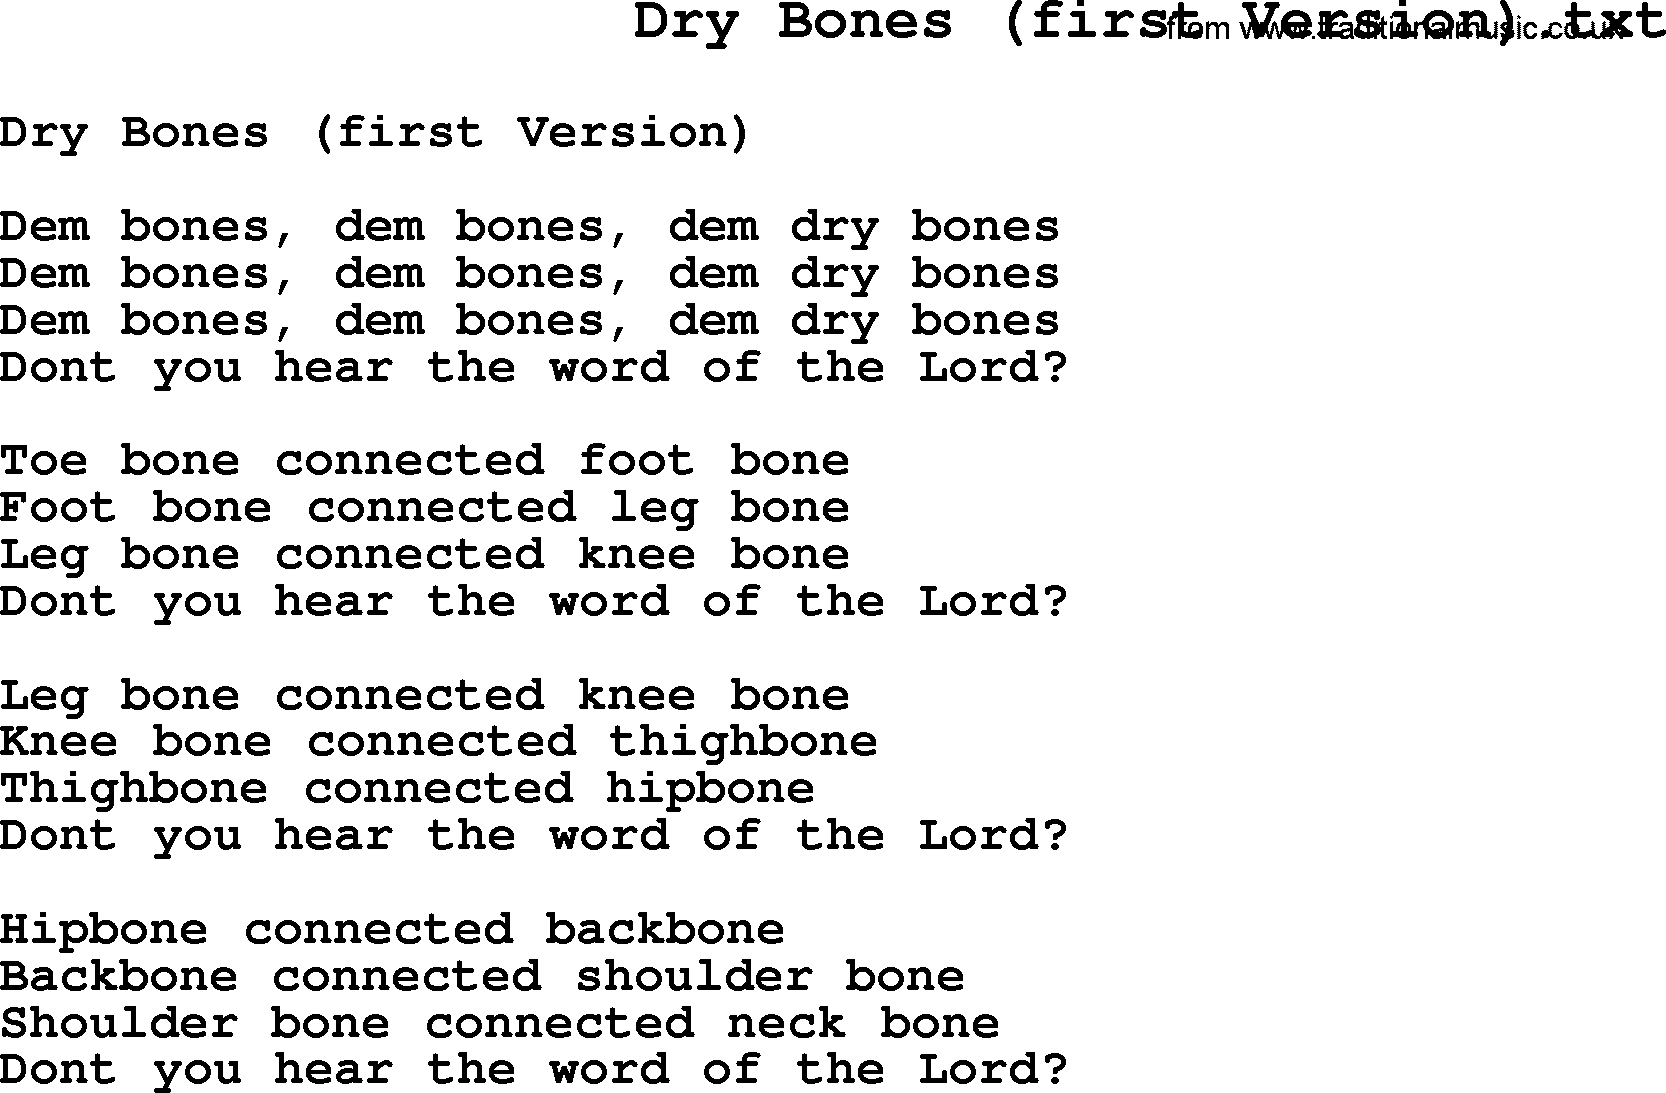 Negro Spiritual Song Lyrics for Dry Bones (1)